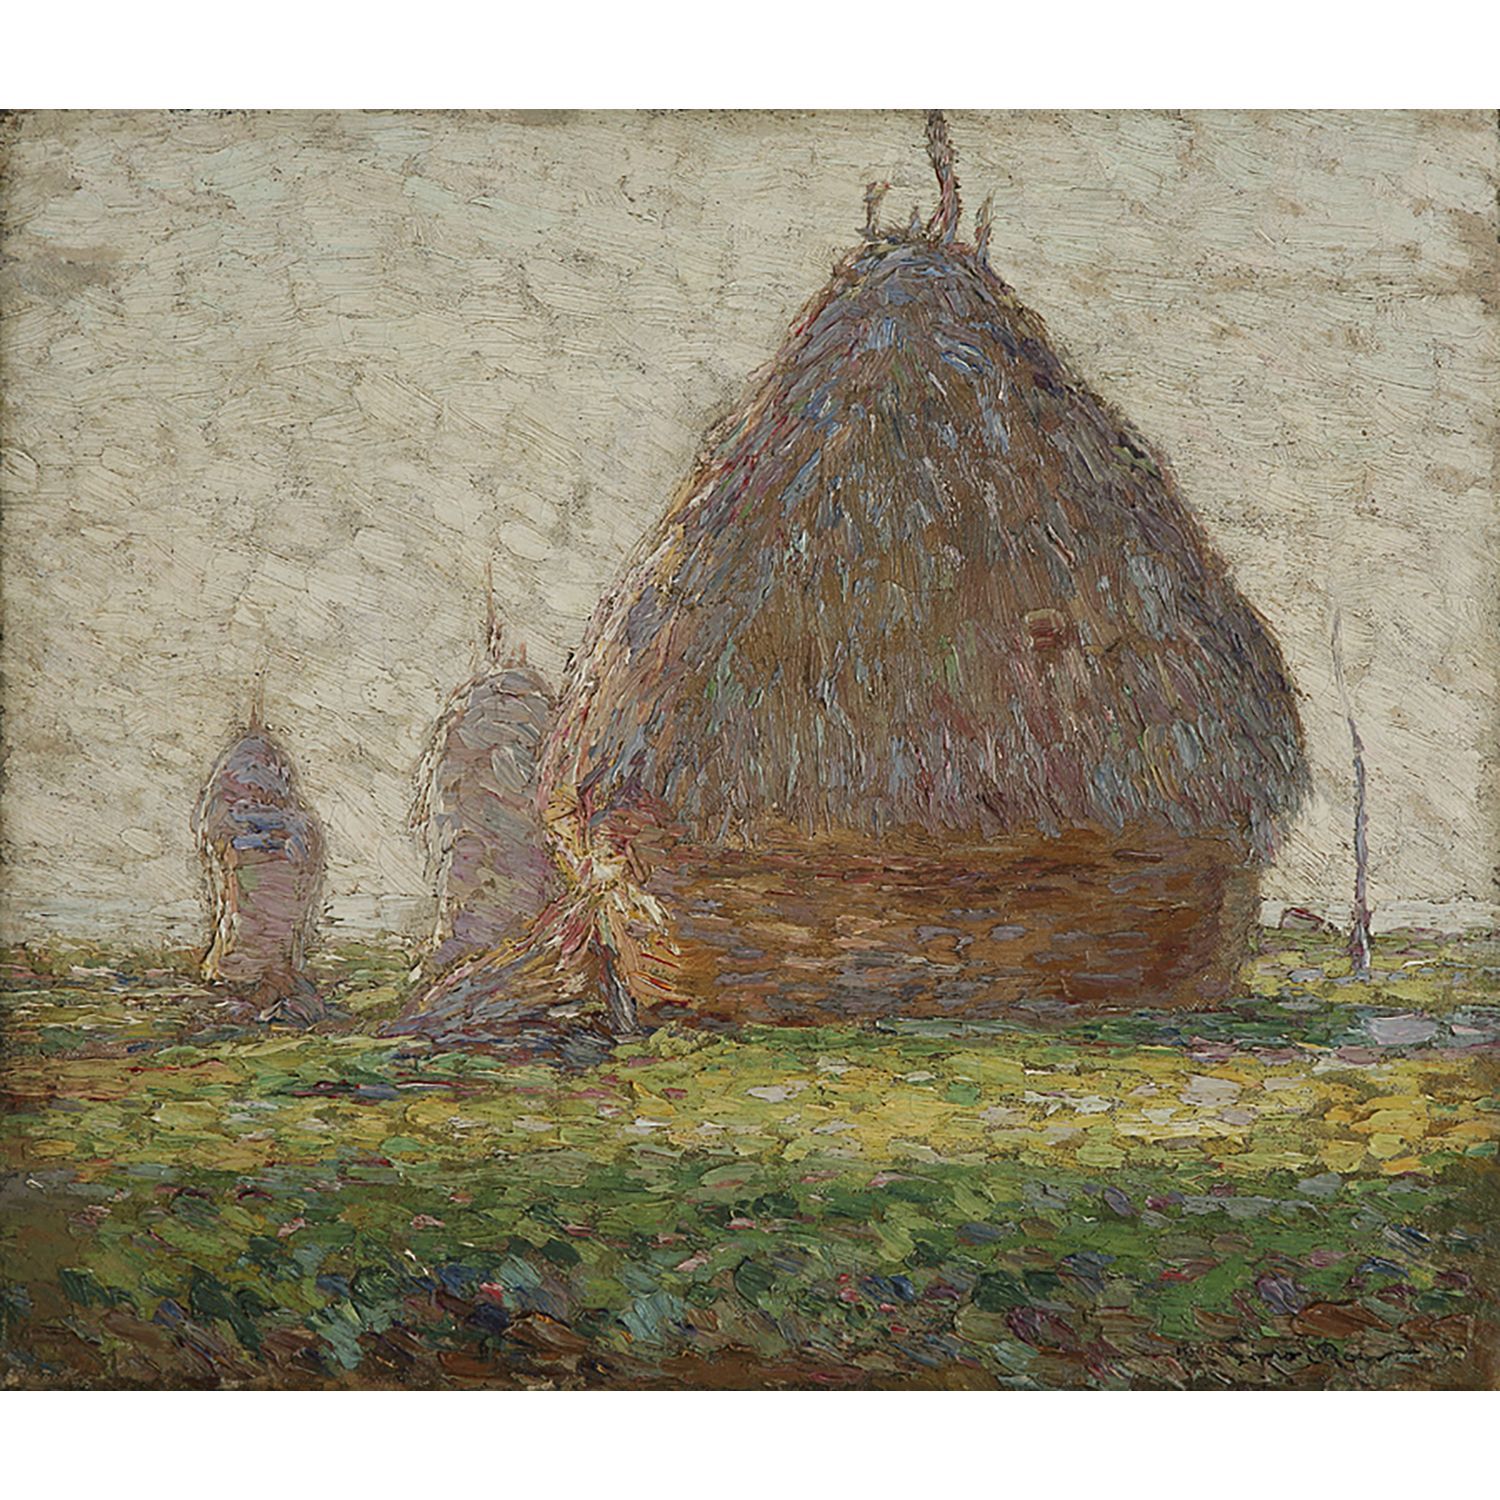 Null 吉诺-罗米蒂 (1881-1967)

海丝塔克

布面油画

右下方有签名

布面油画；右下方有签名

36,5 x 42,5 cm - 14 3/&hellip;